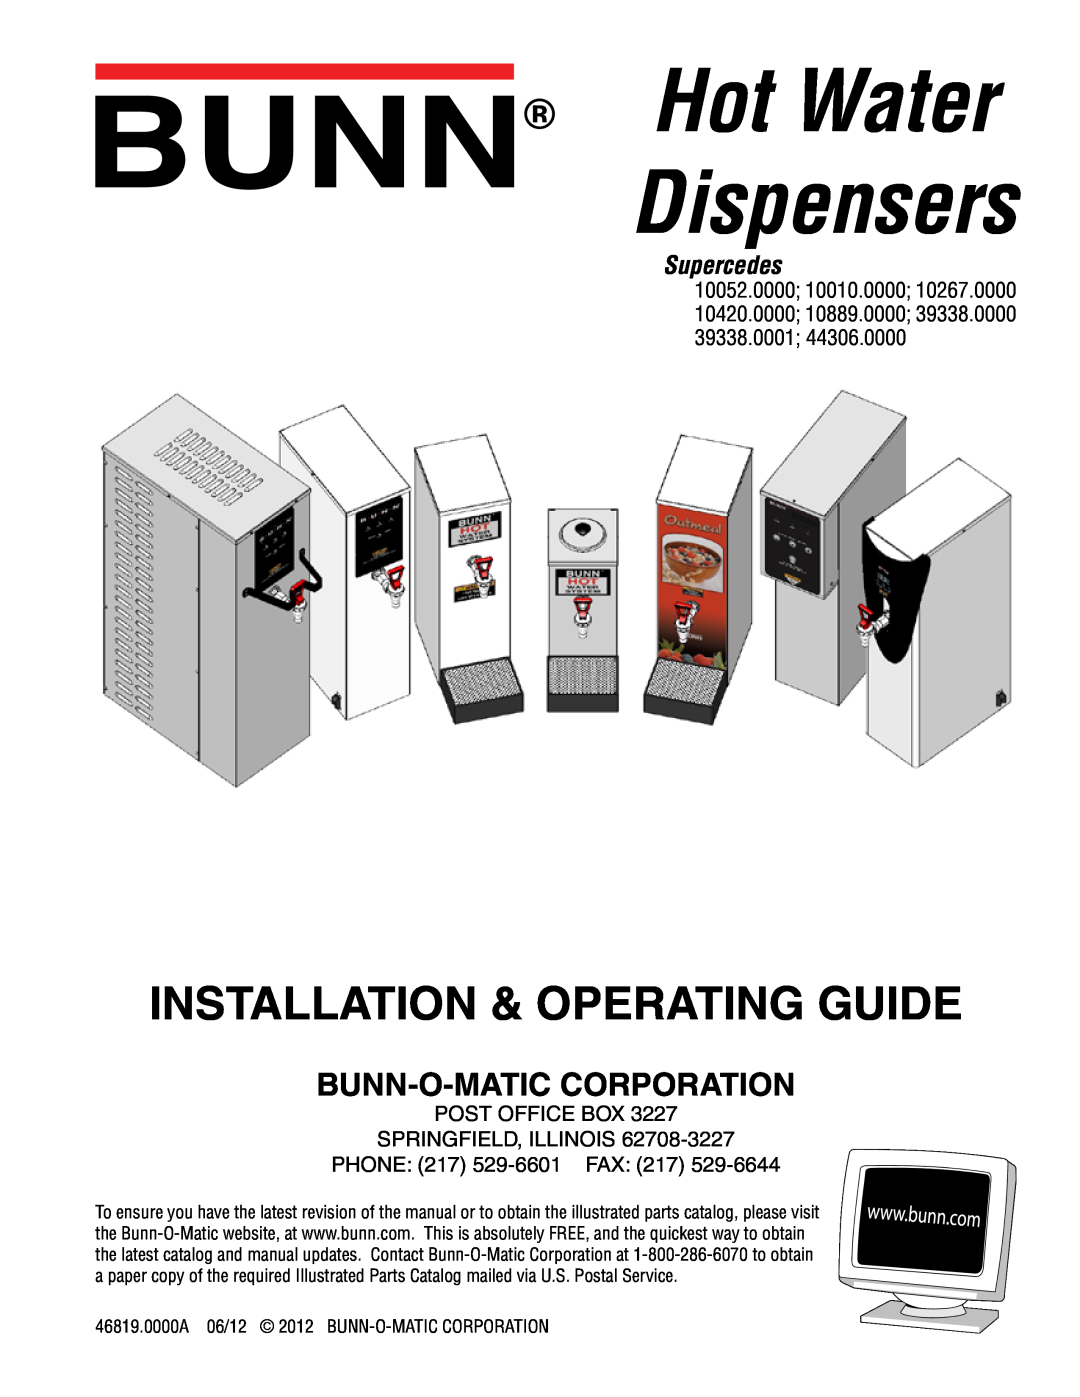 Bunn 39338.0001, 10010 manual Bunn-O-Matic Corporation, Hot Water, Dispensers, Installation & Operating Guide, Supercedes 